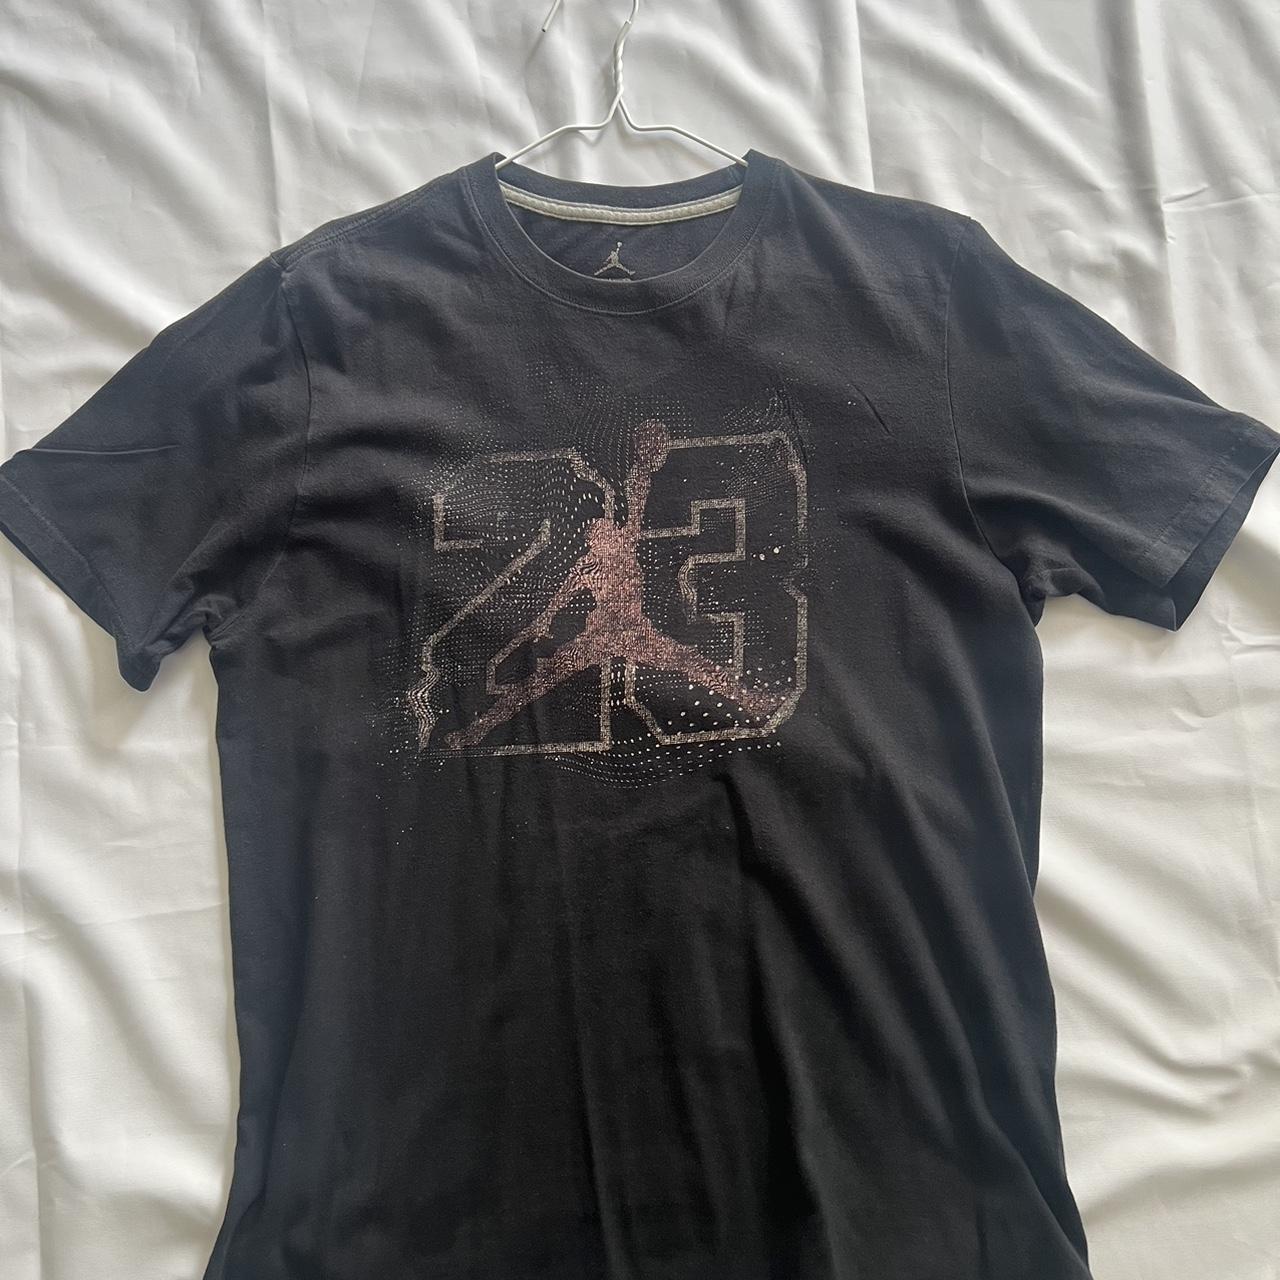 Jordan 23 t shirt - Depop